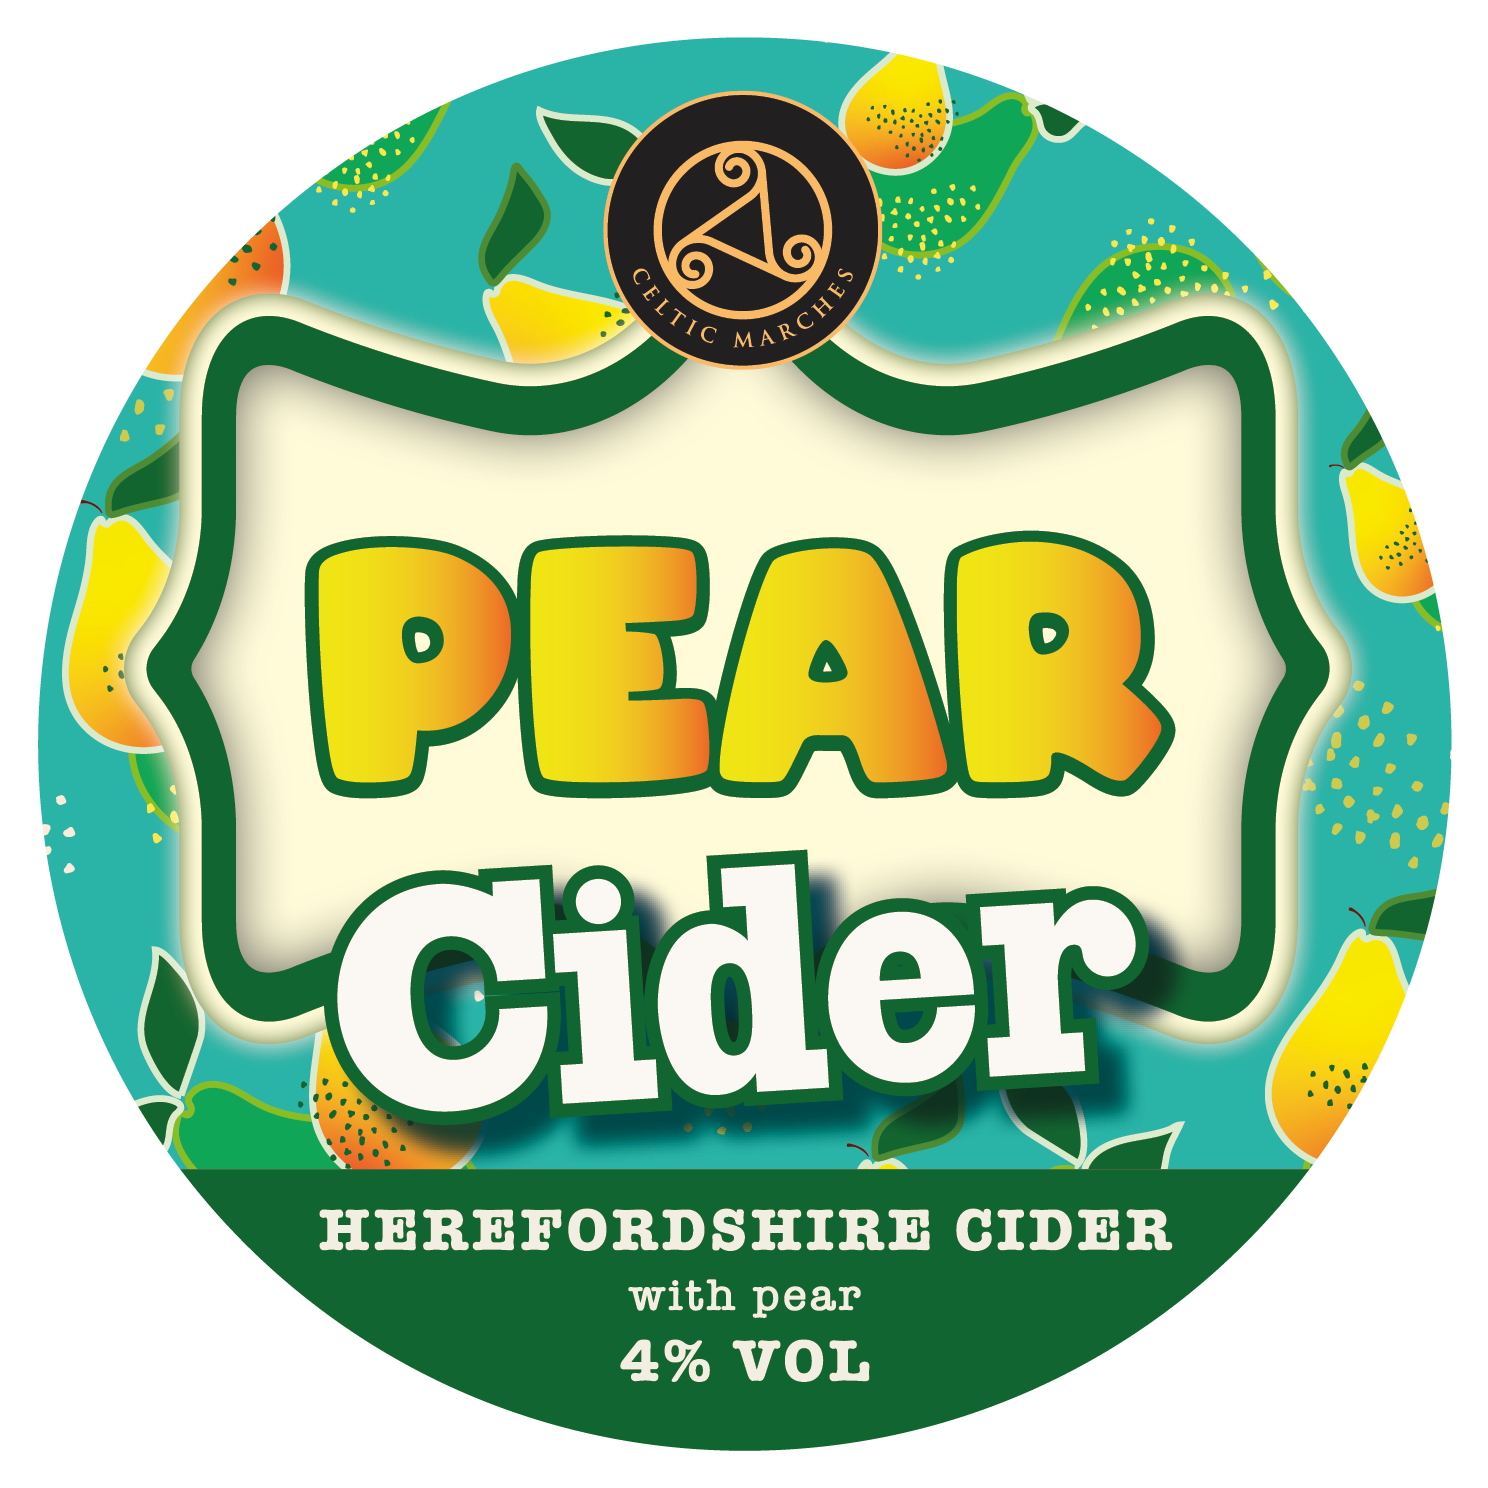 Celtic Marches Pear Cider 20Ltr Bag in Box 4.0%